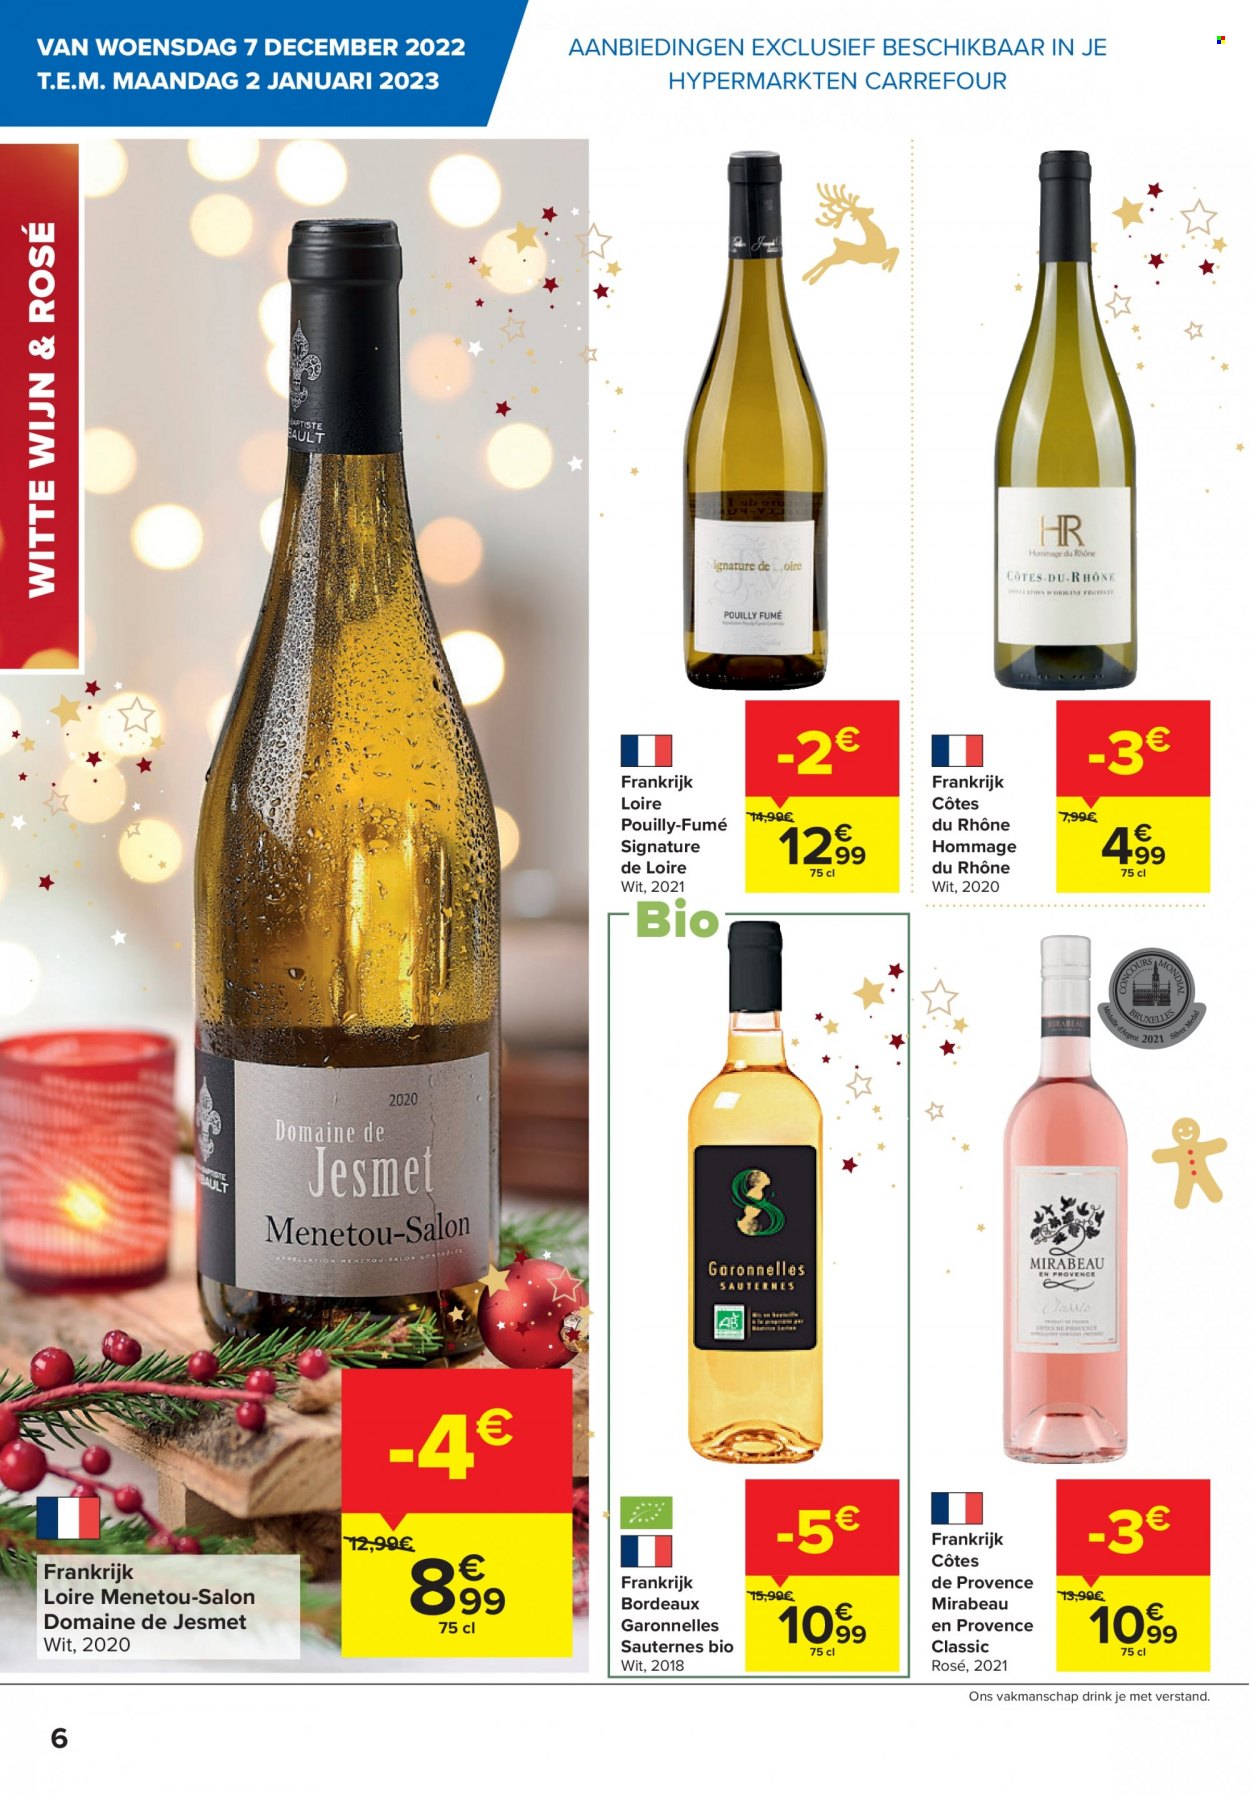 thumbnail - Carrefour hypermarkt-aanbieding - 07/12/2022 - 02/01/2023 -  producten in de aanbieding - witte wijn, Côtes de Provence, wijn, Sauternes, Côtes du Rhône, Bordeaux, Frankrijk. Pagina 6.